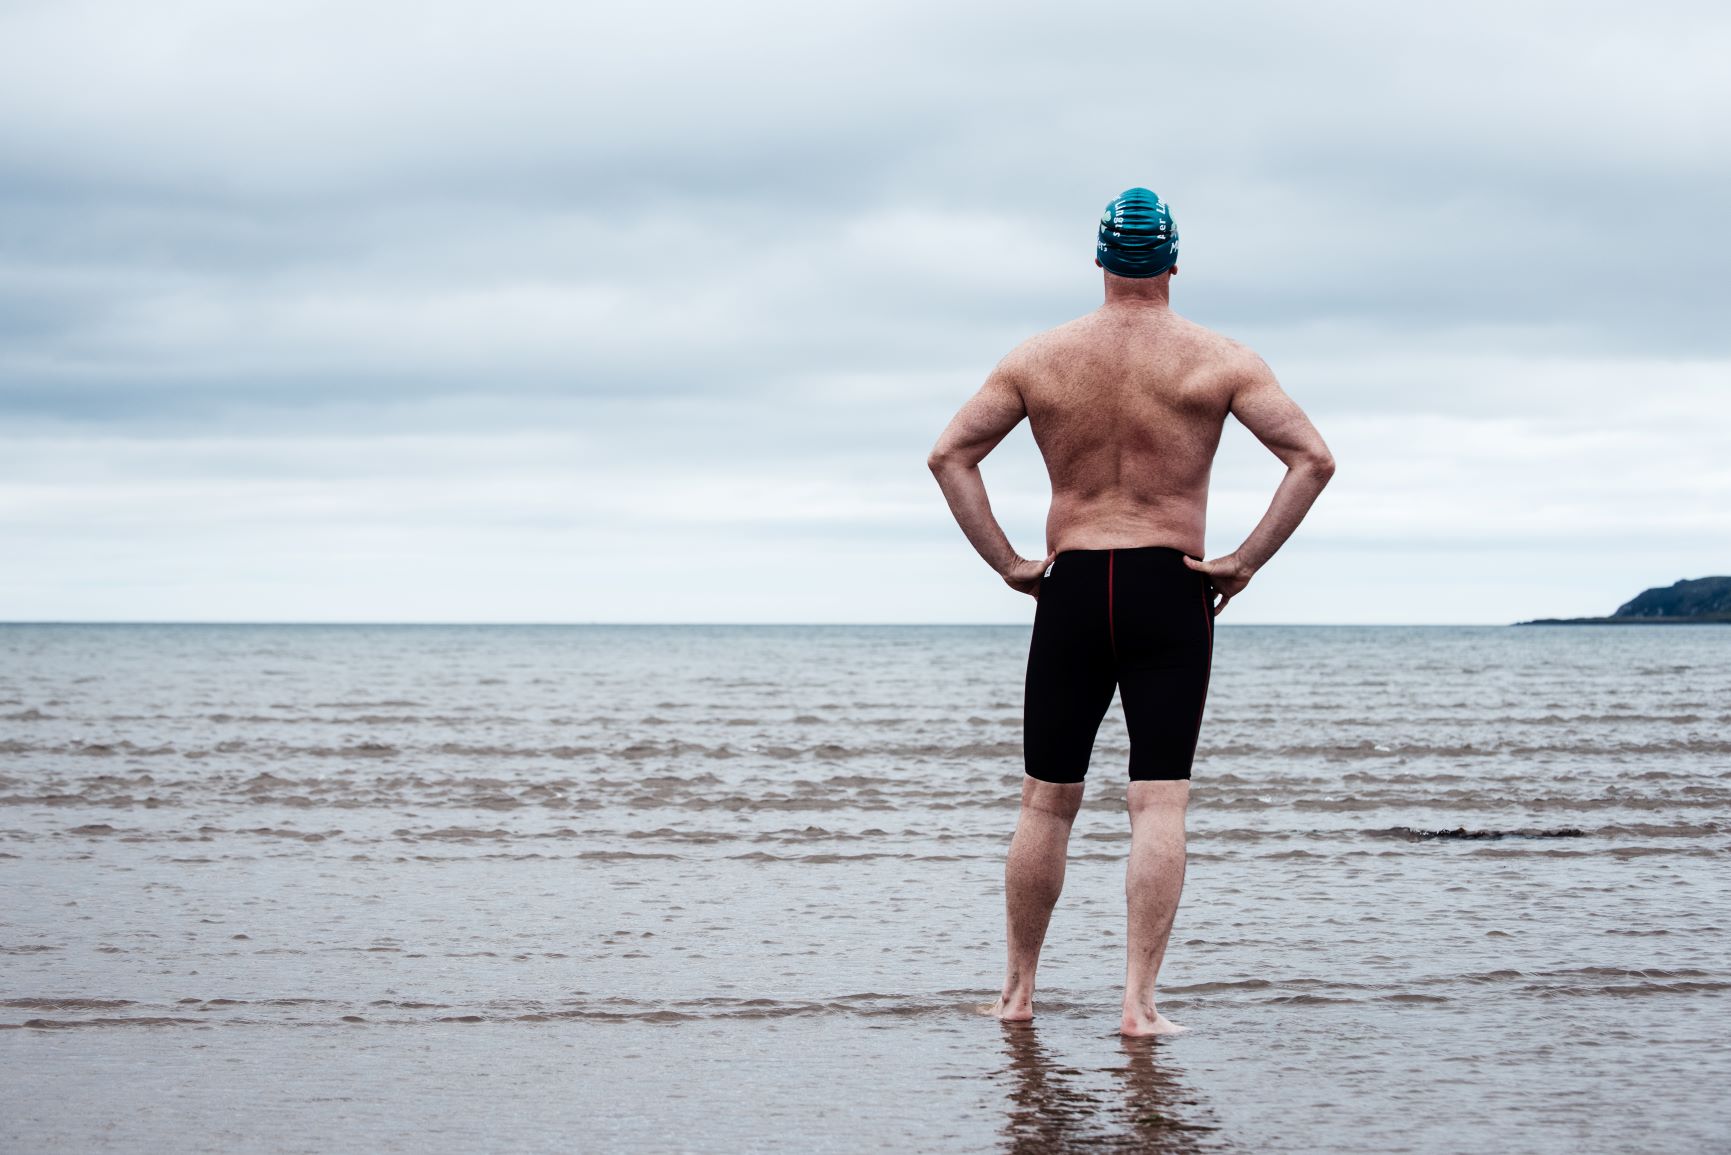 Man standing on sea shore ready to swim